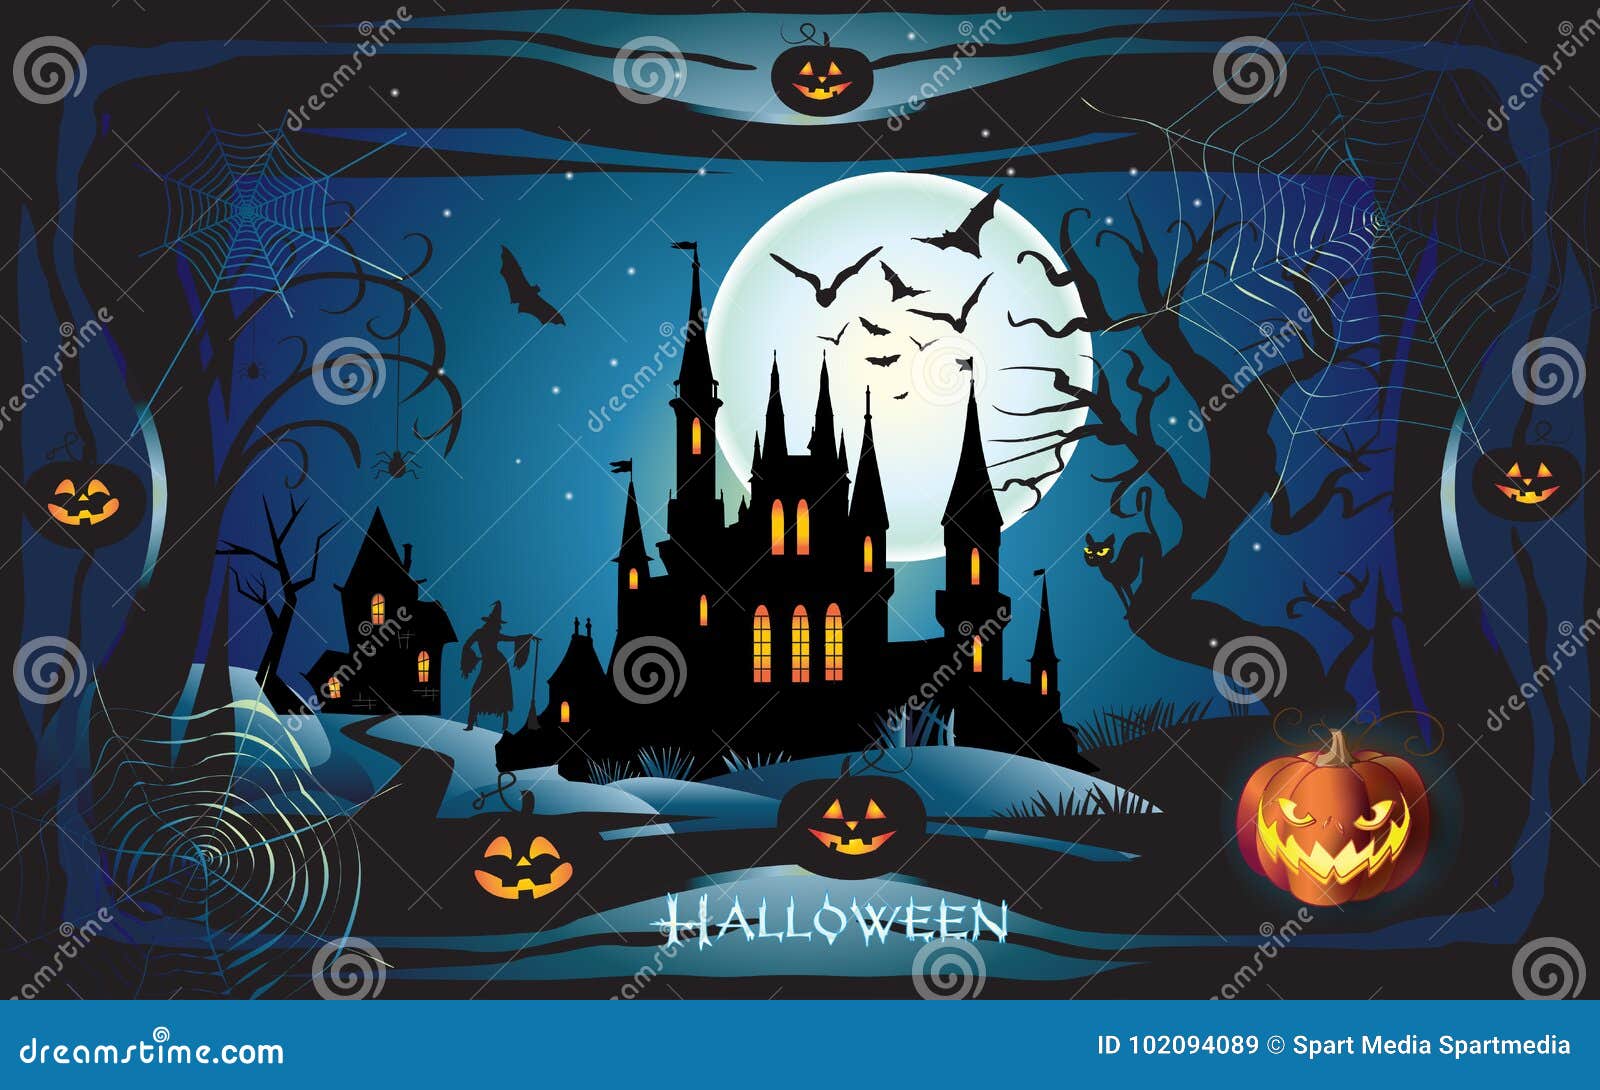 Halloween Holiday Fantasy Illustration Stock Vector ...